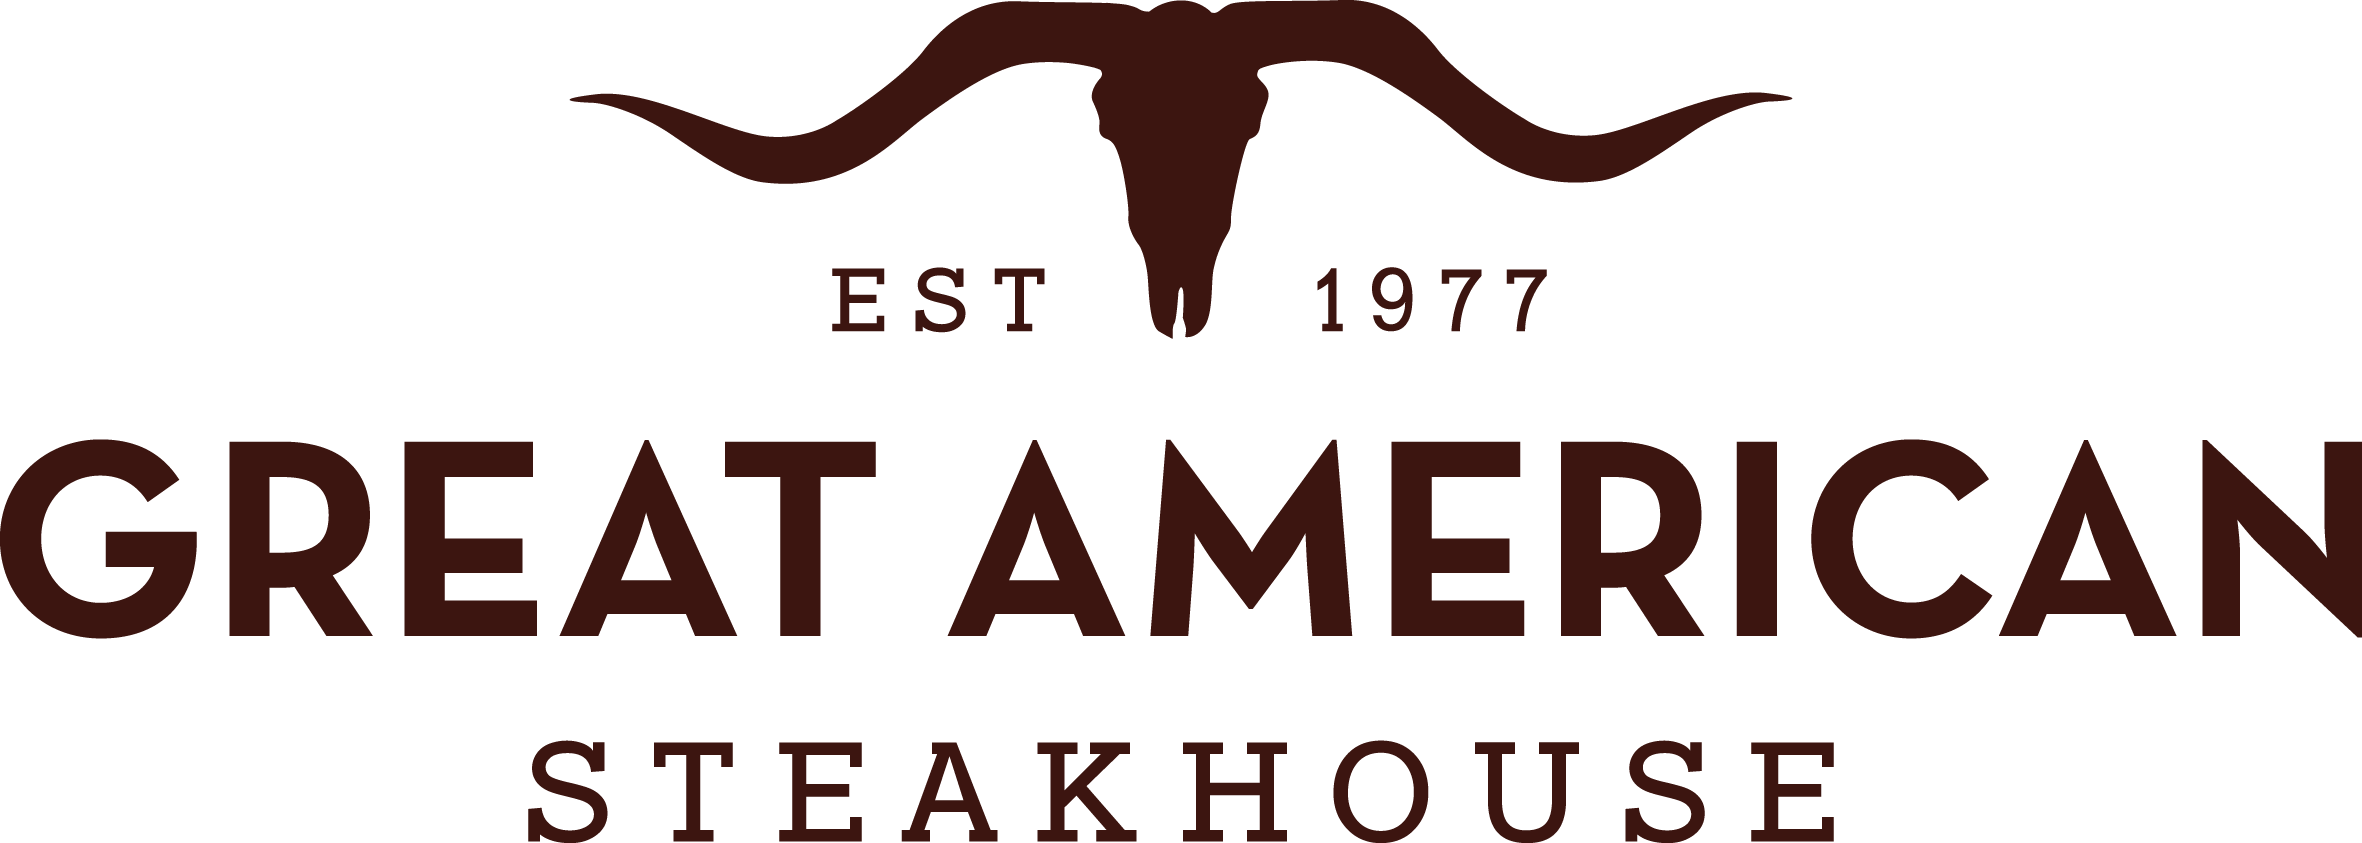 Great American Steak House